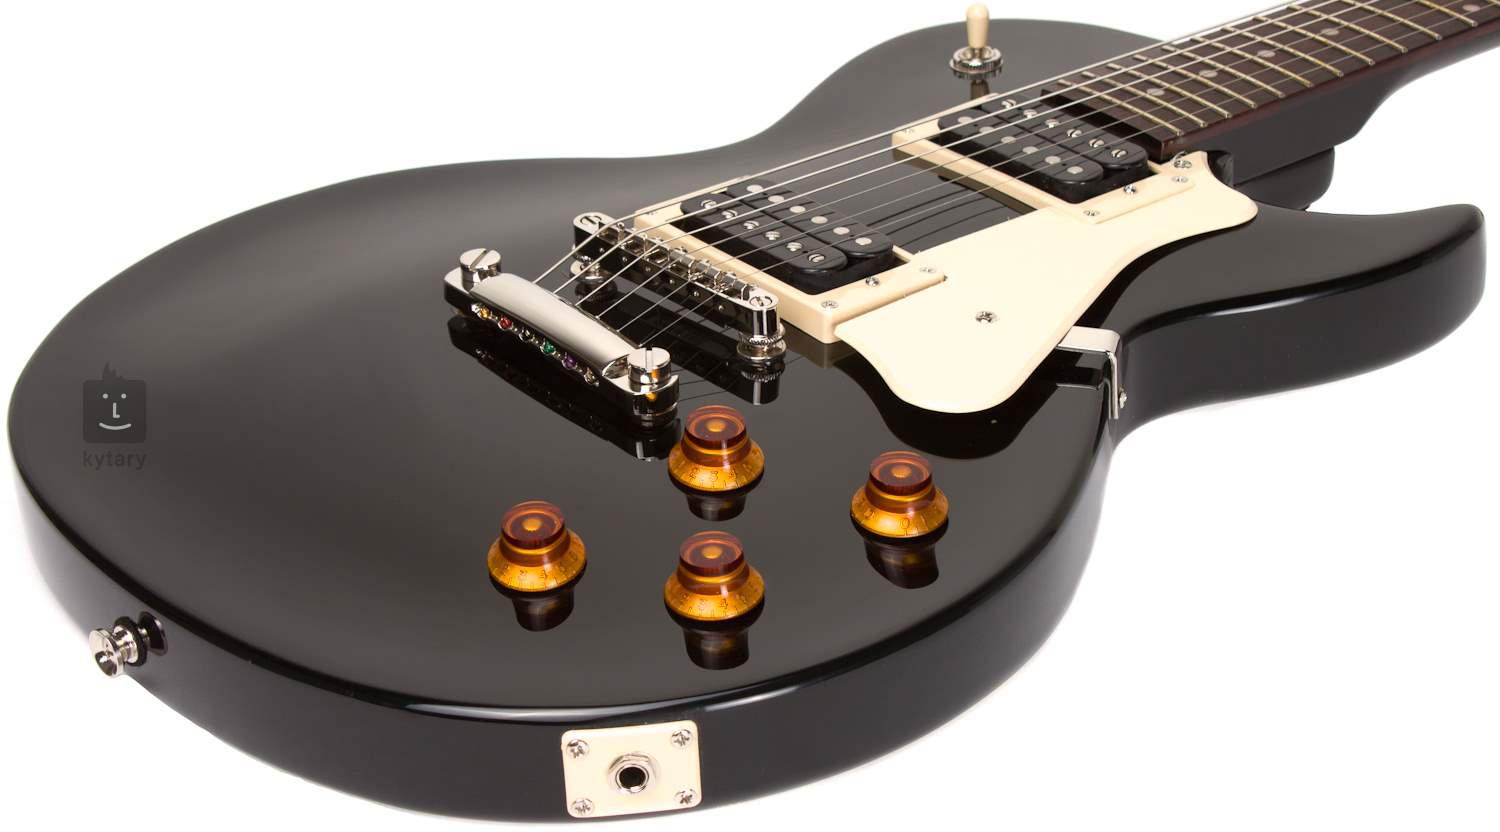 Cort - Guitarra Eléctrica Classic Rock, Color: Negro Mod.CR100-BK_4